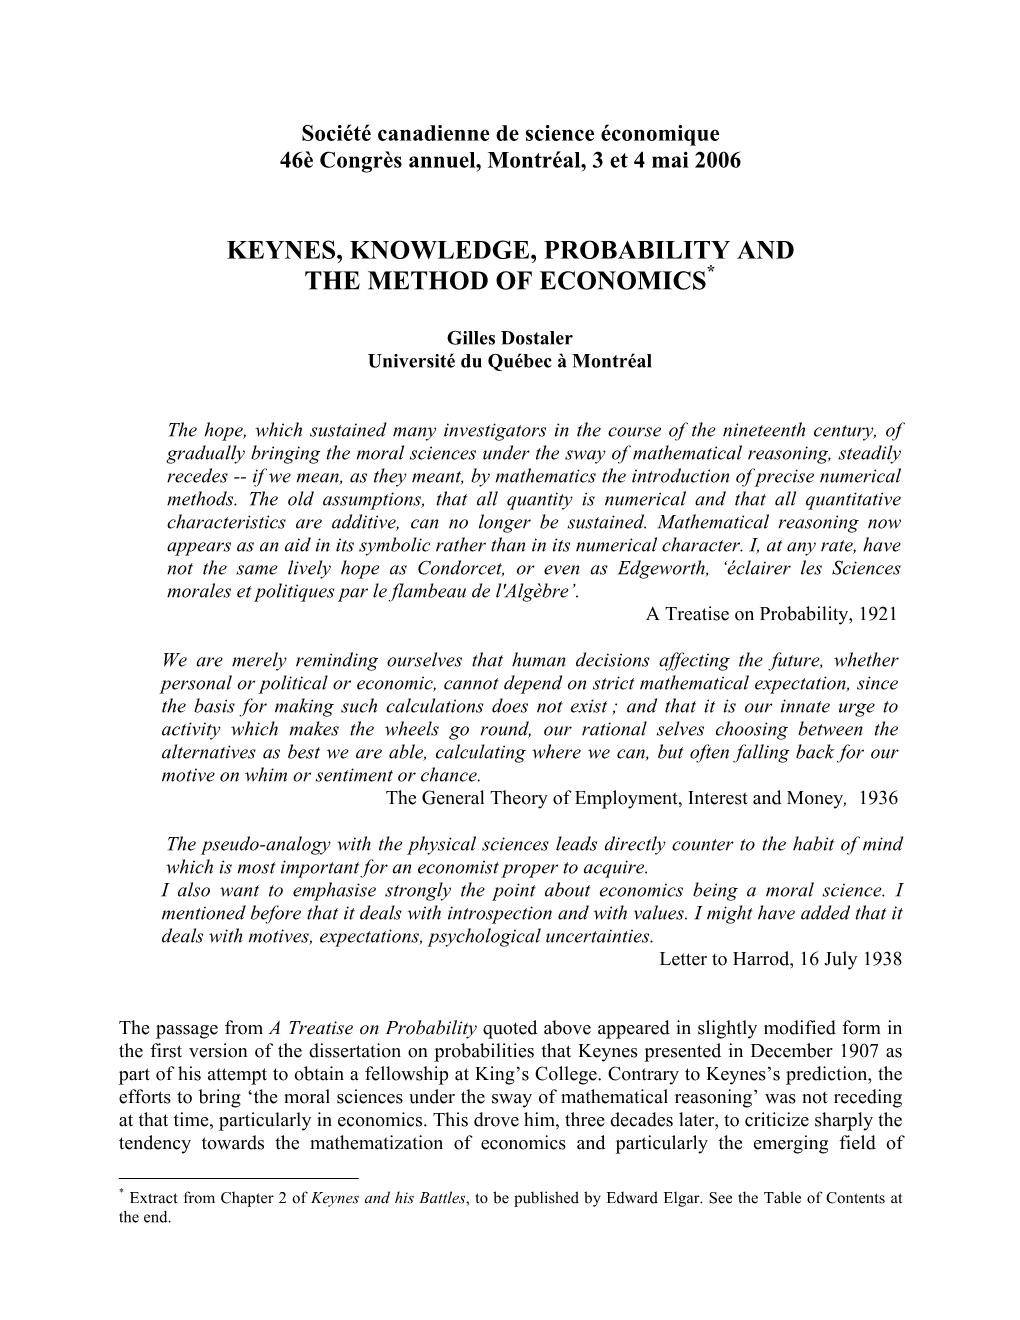 Keynes, Knowledge, Probability and the Method of Economics*